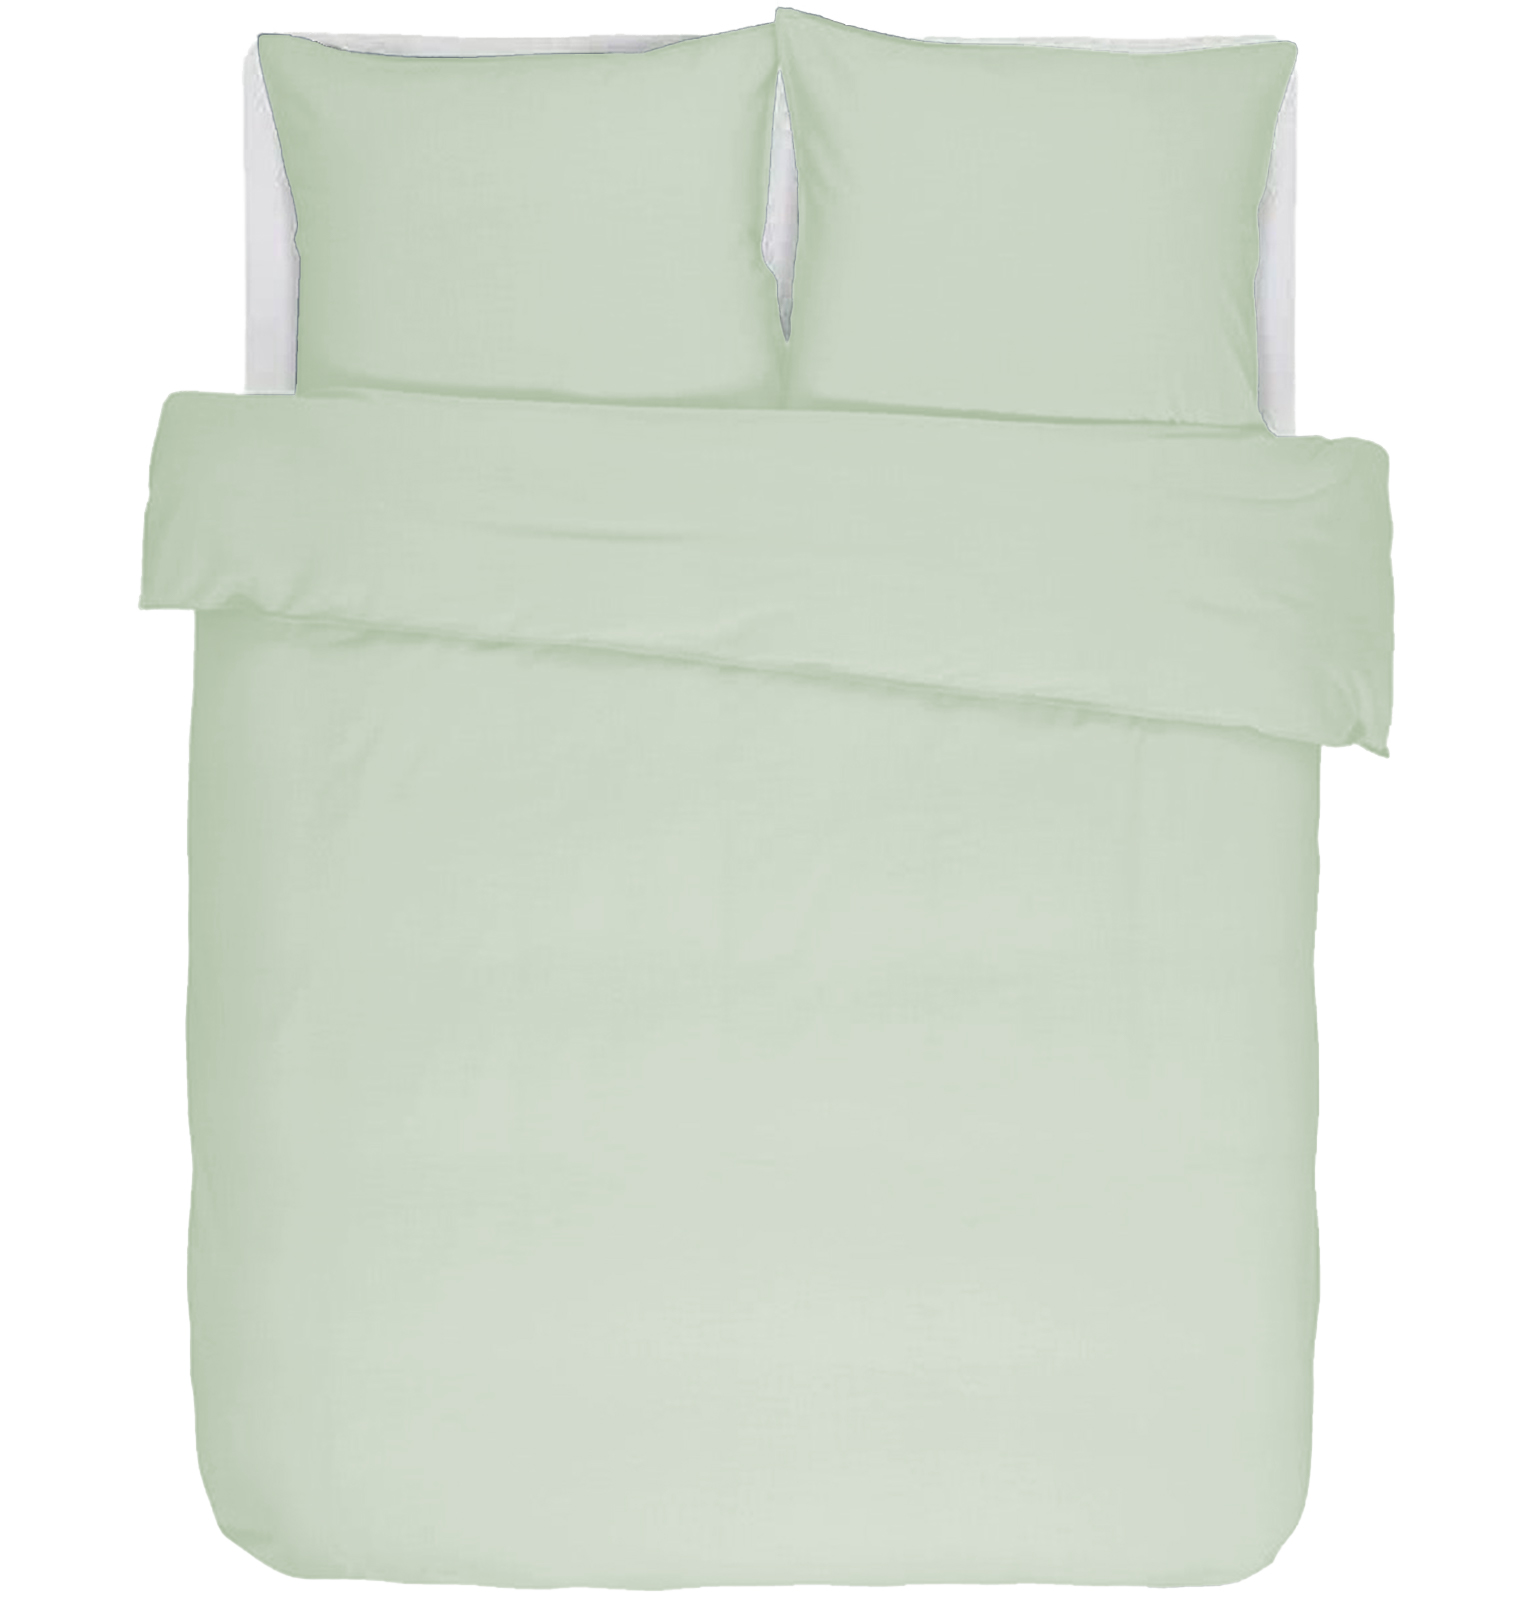 Duvet cover  IRIS, Stone washed uni cotton, 240x220, mint green